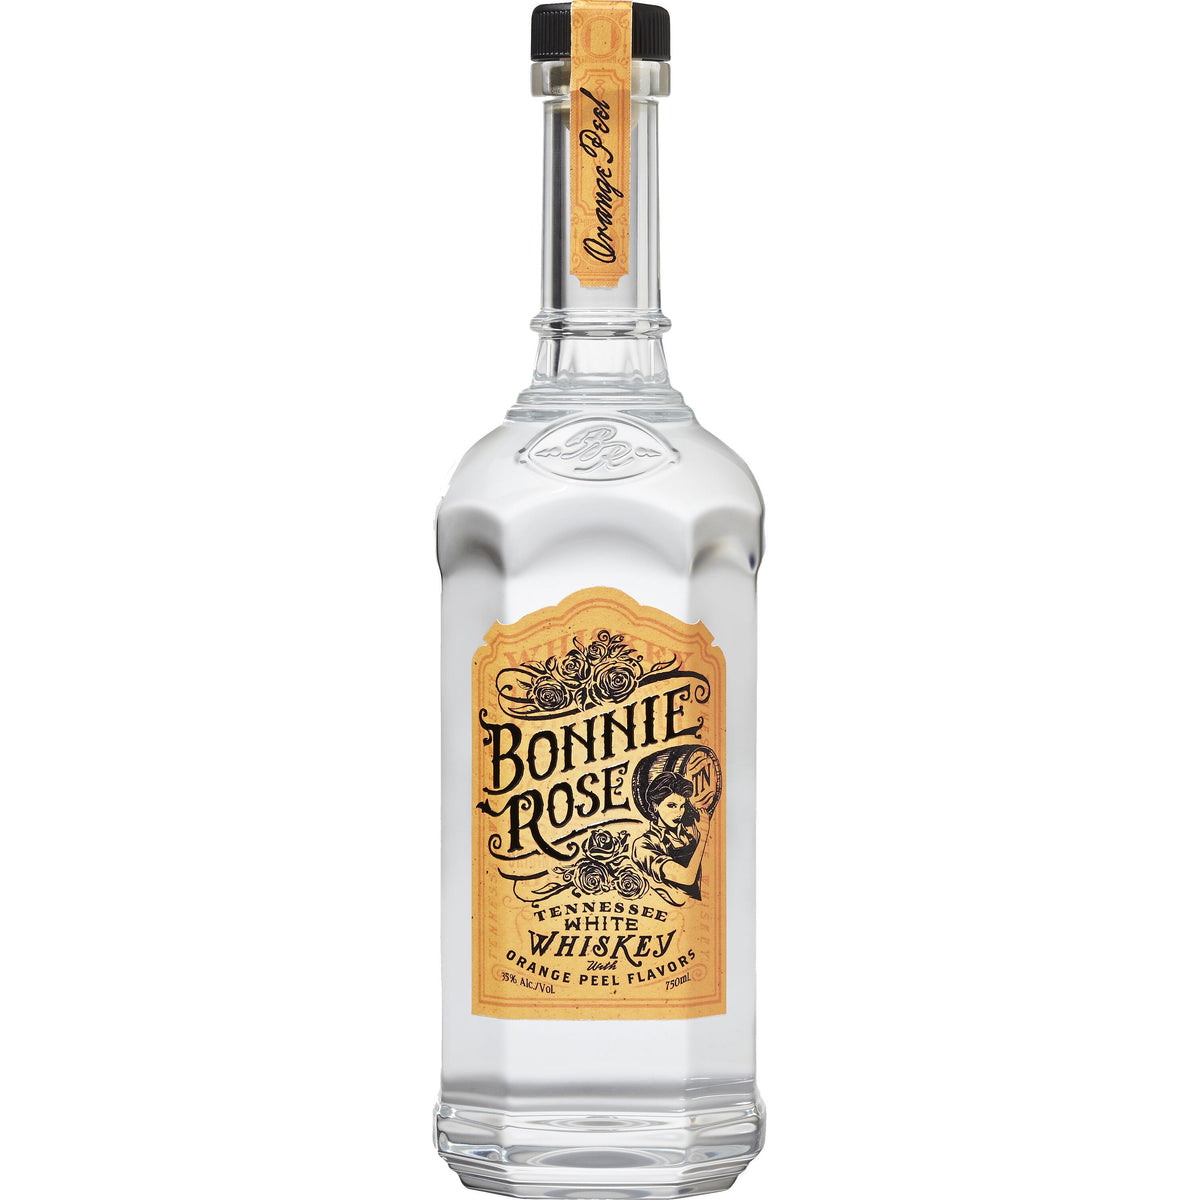 Bonnie Rose Tennessee Orange Peel Whiskey